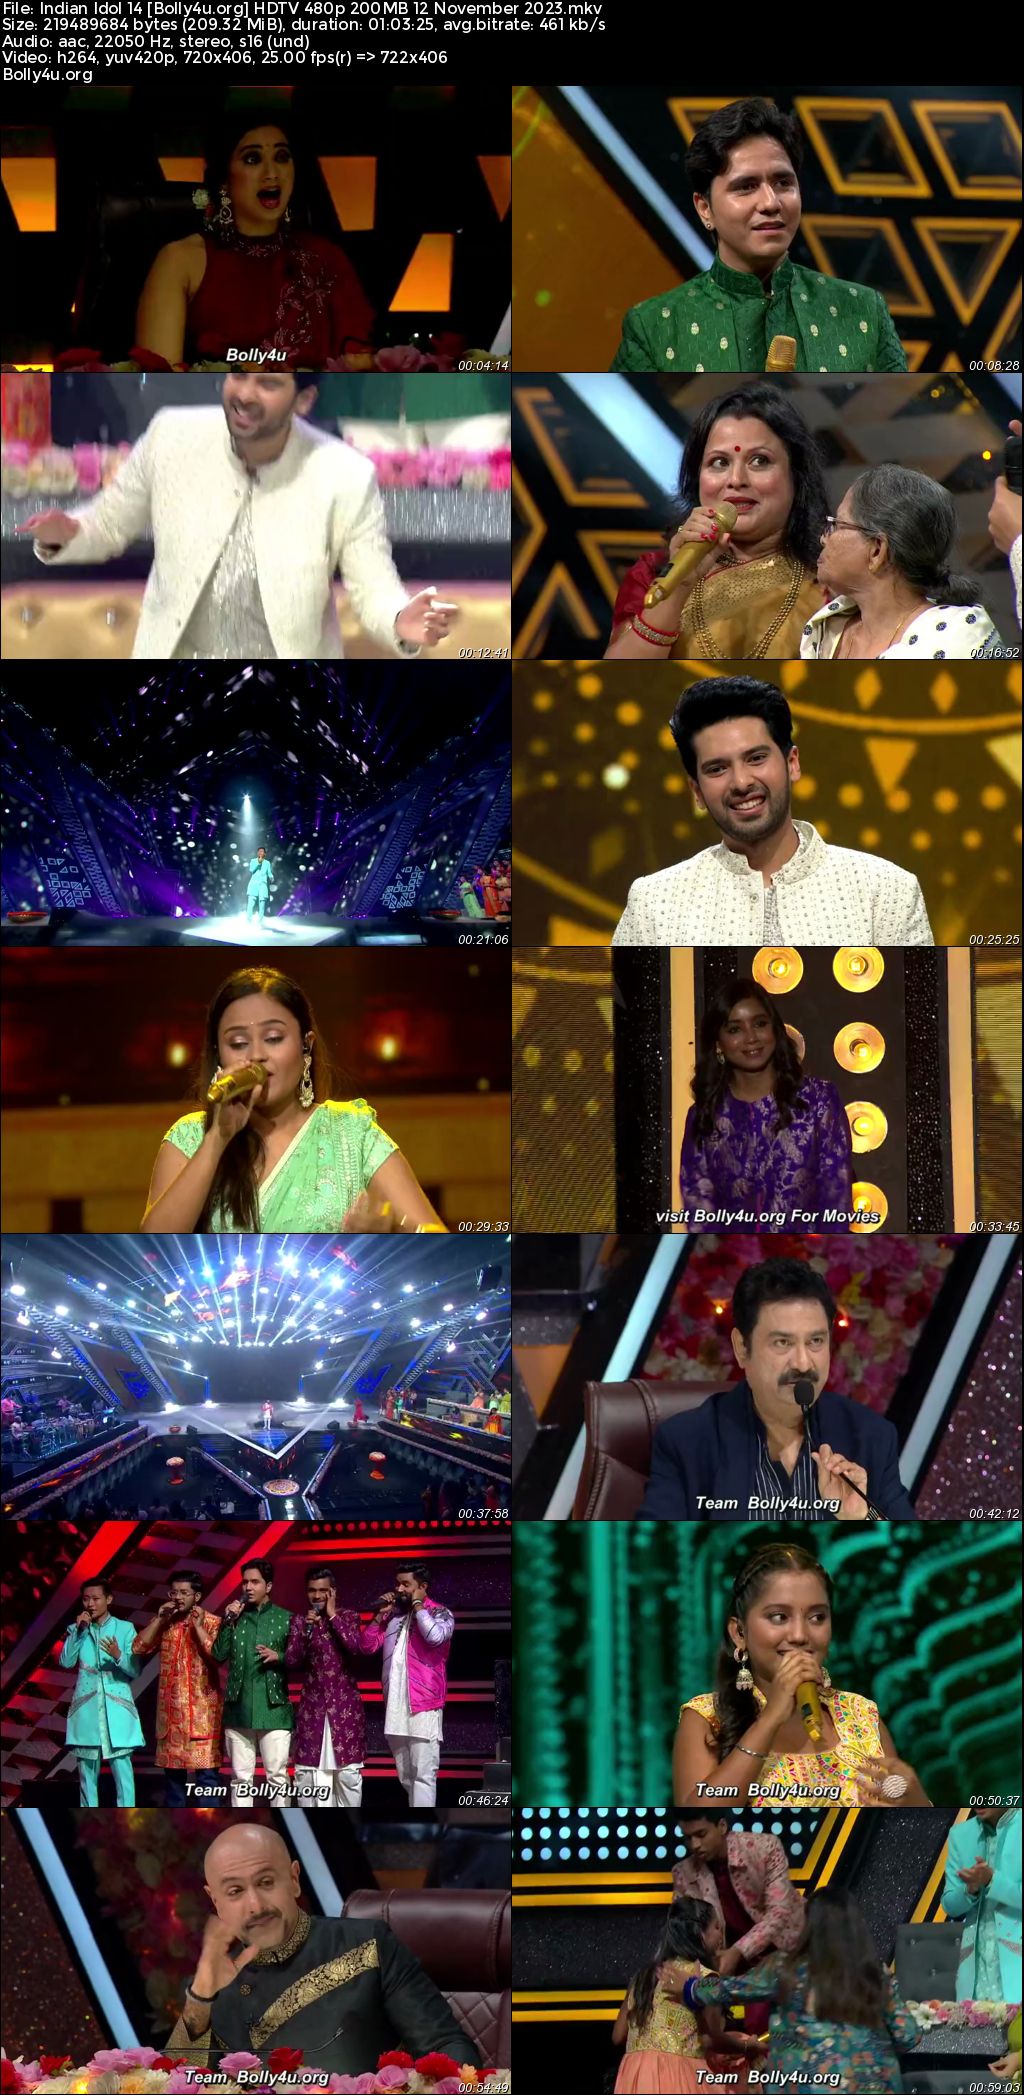 Indian Idol 14 HDTV 480p 200MB 12 November 2023 Download